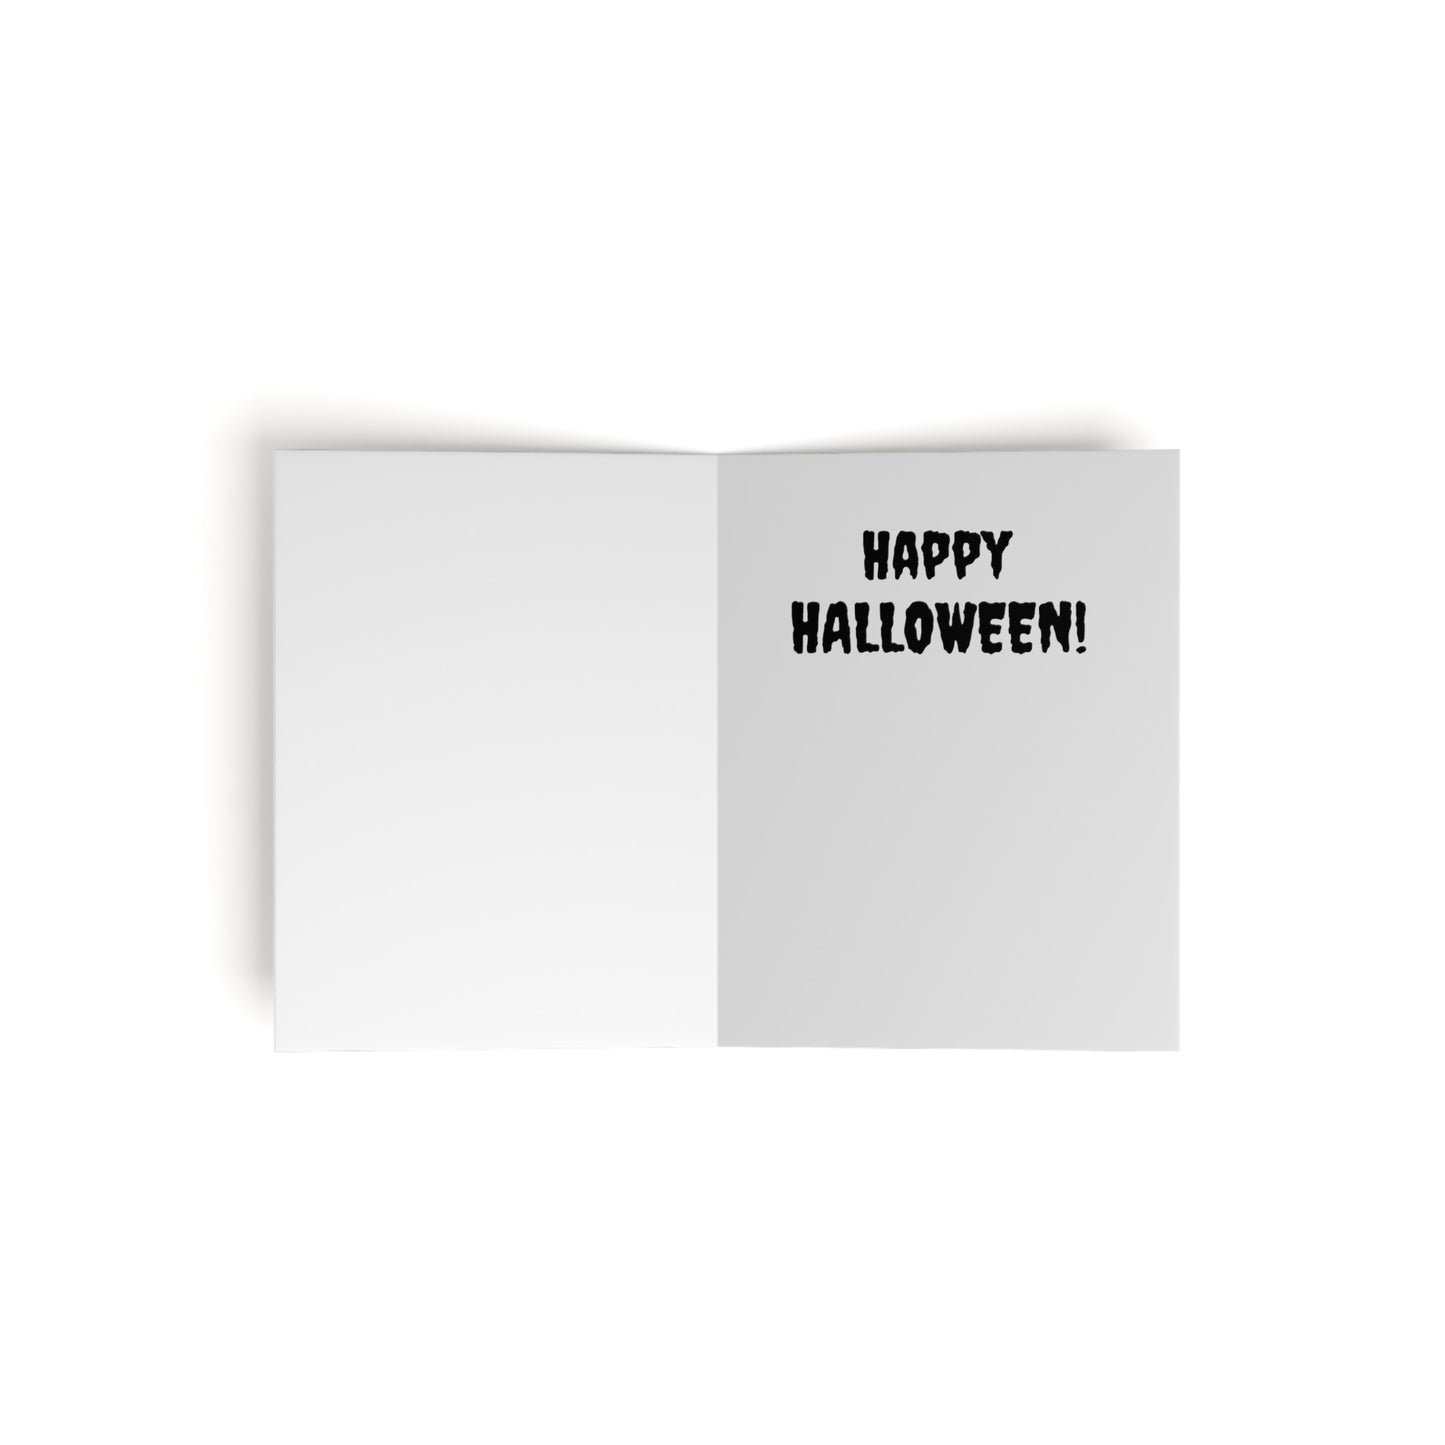 Halloween Greeting Cards - Black Daisy (8 pcs)